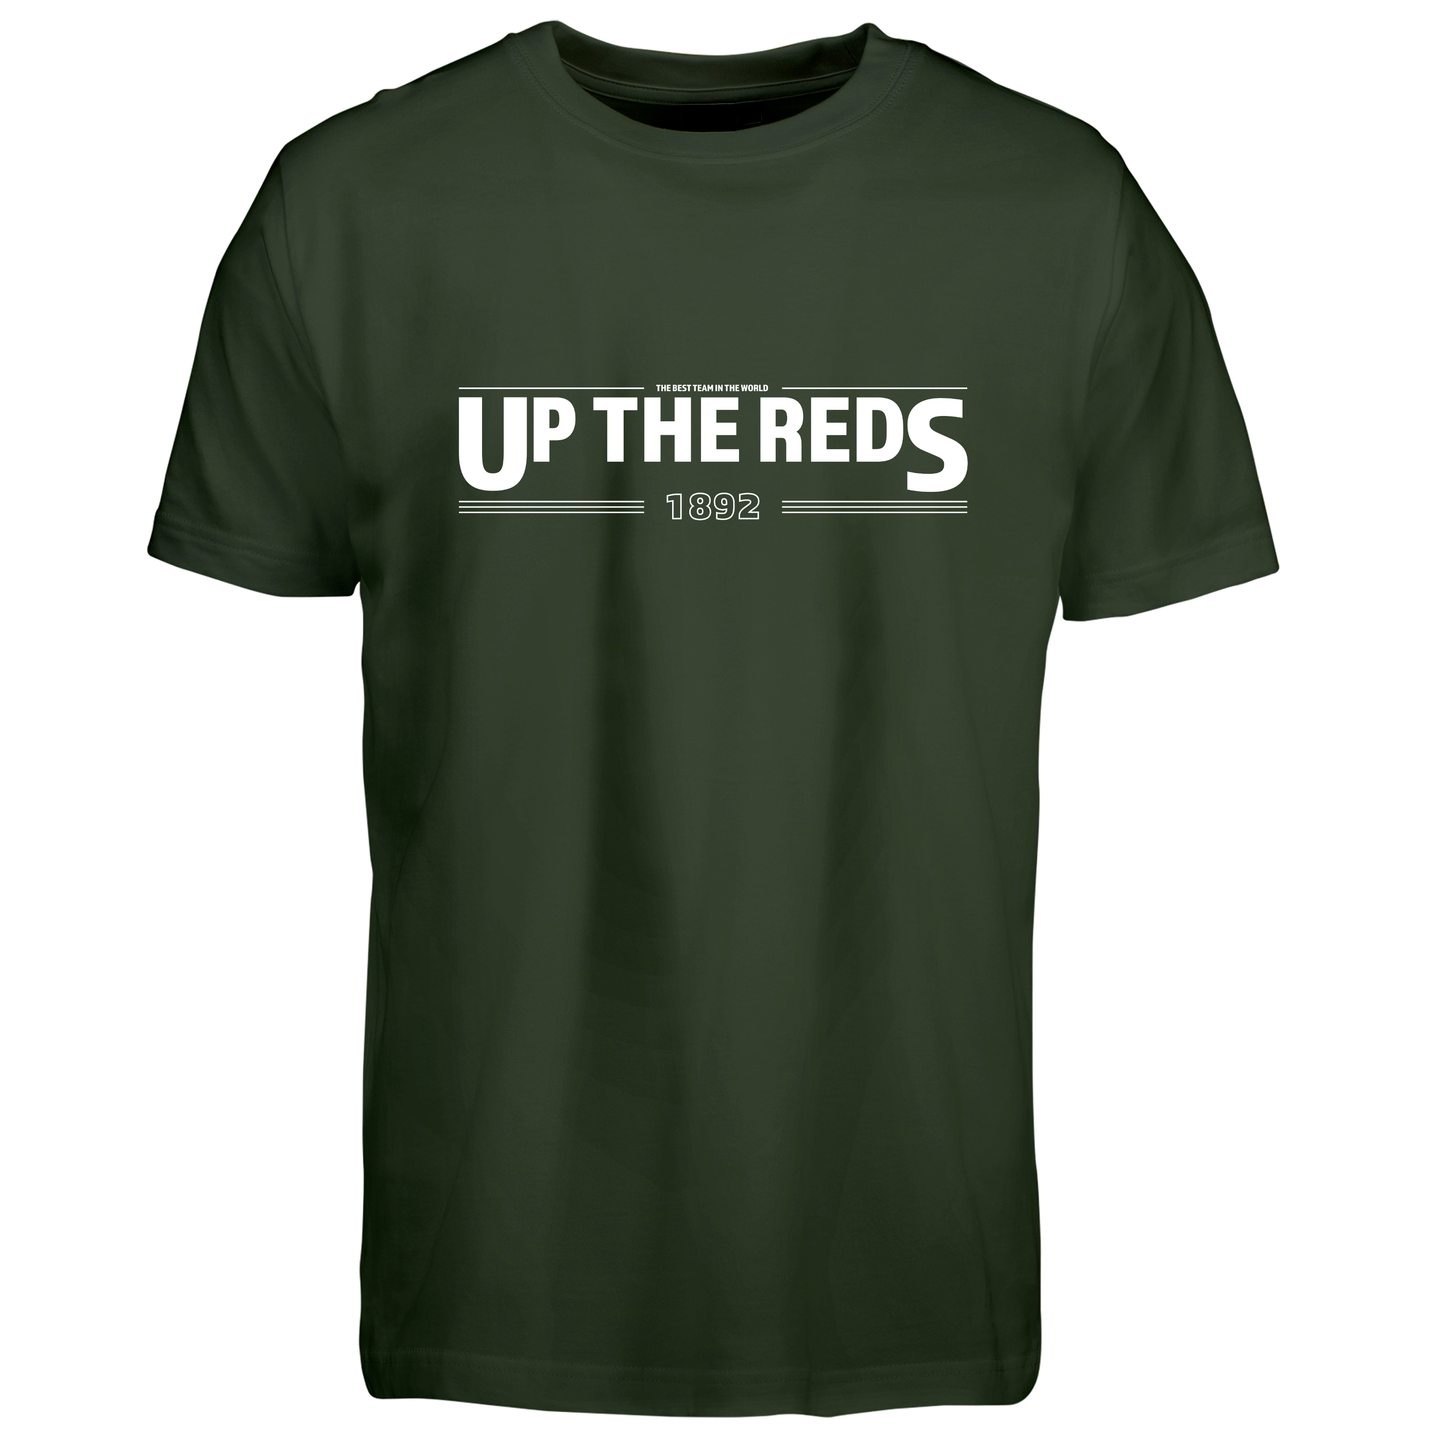 UP THE REDS - T-shirt